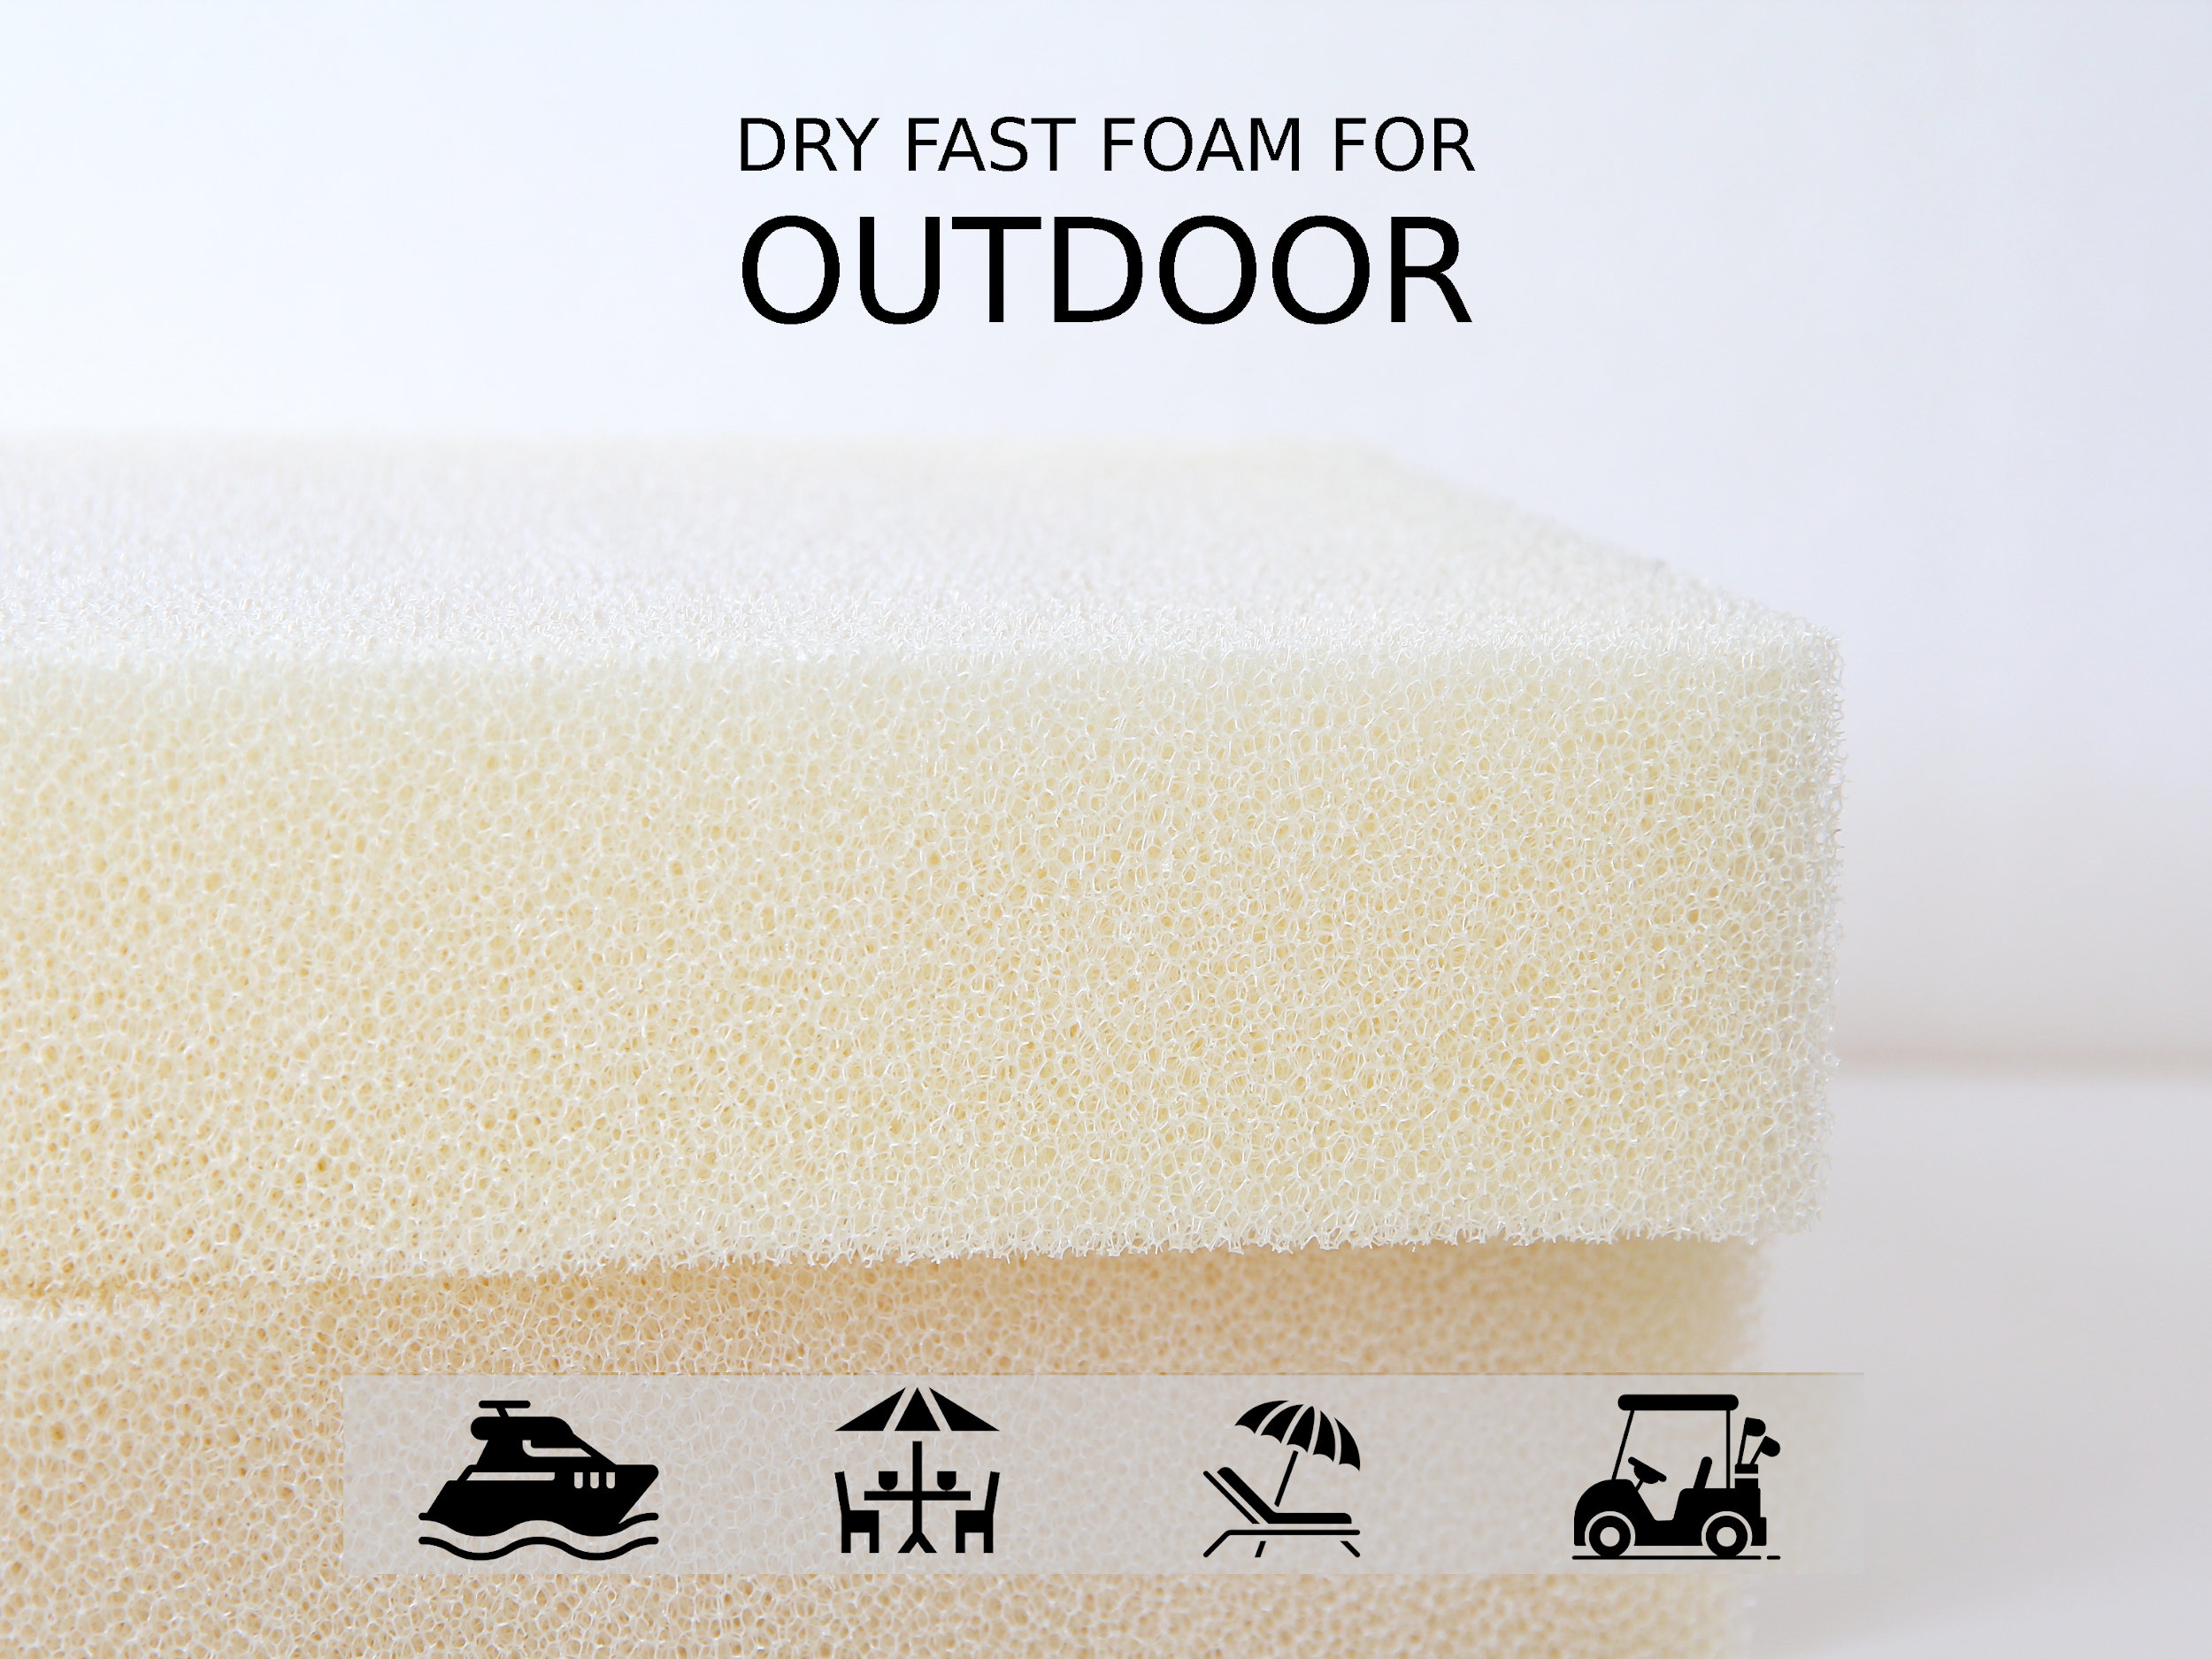 6 X 19 X 19 High Density Upholstery Foam 